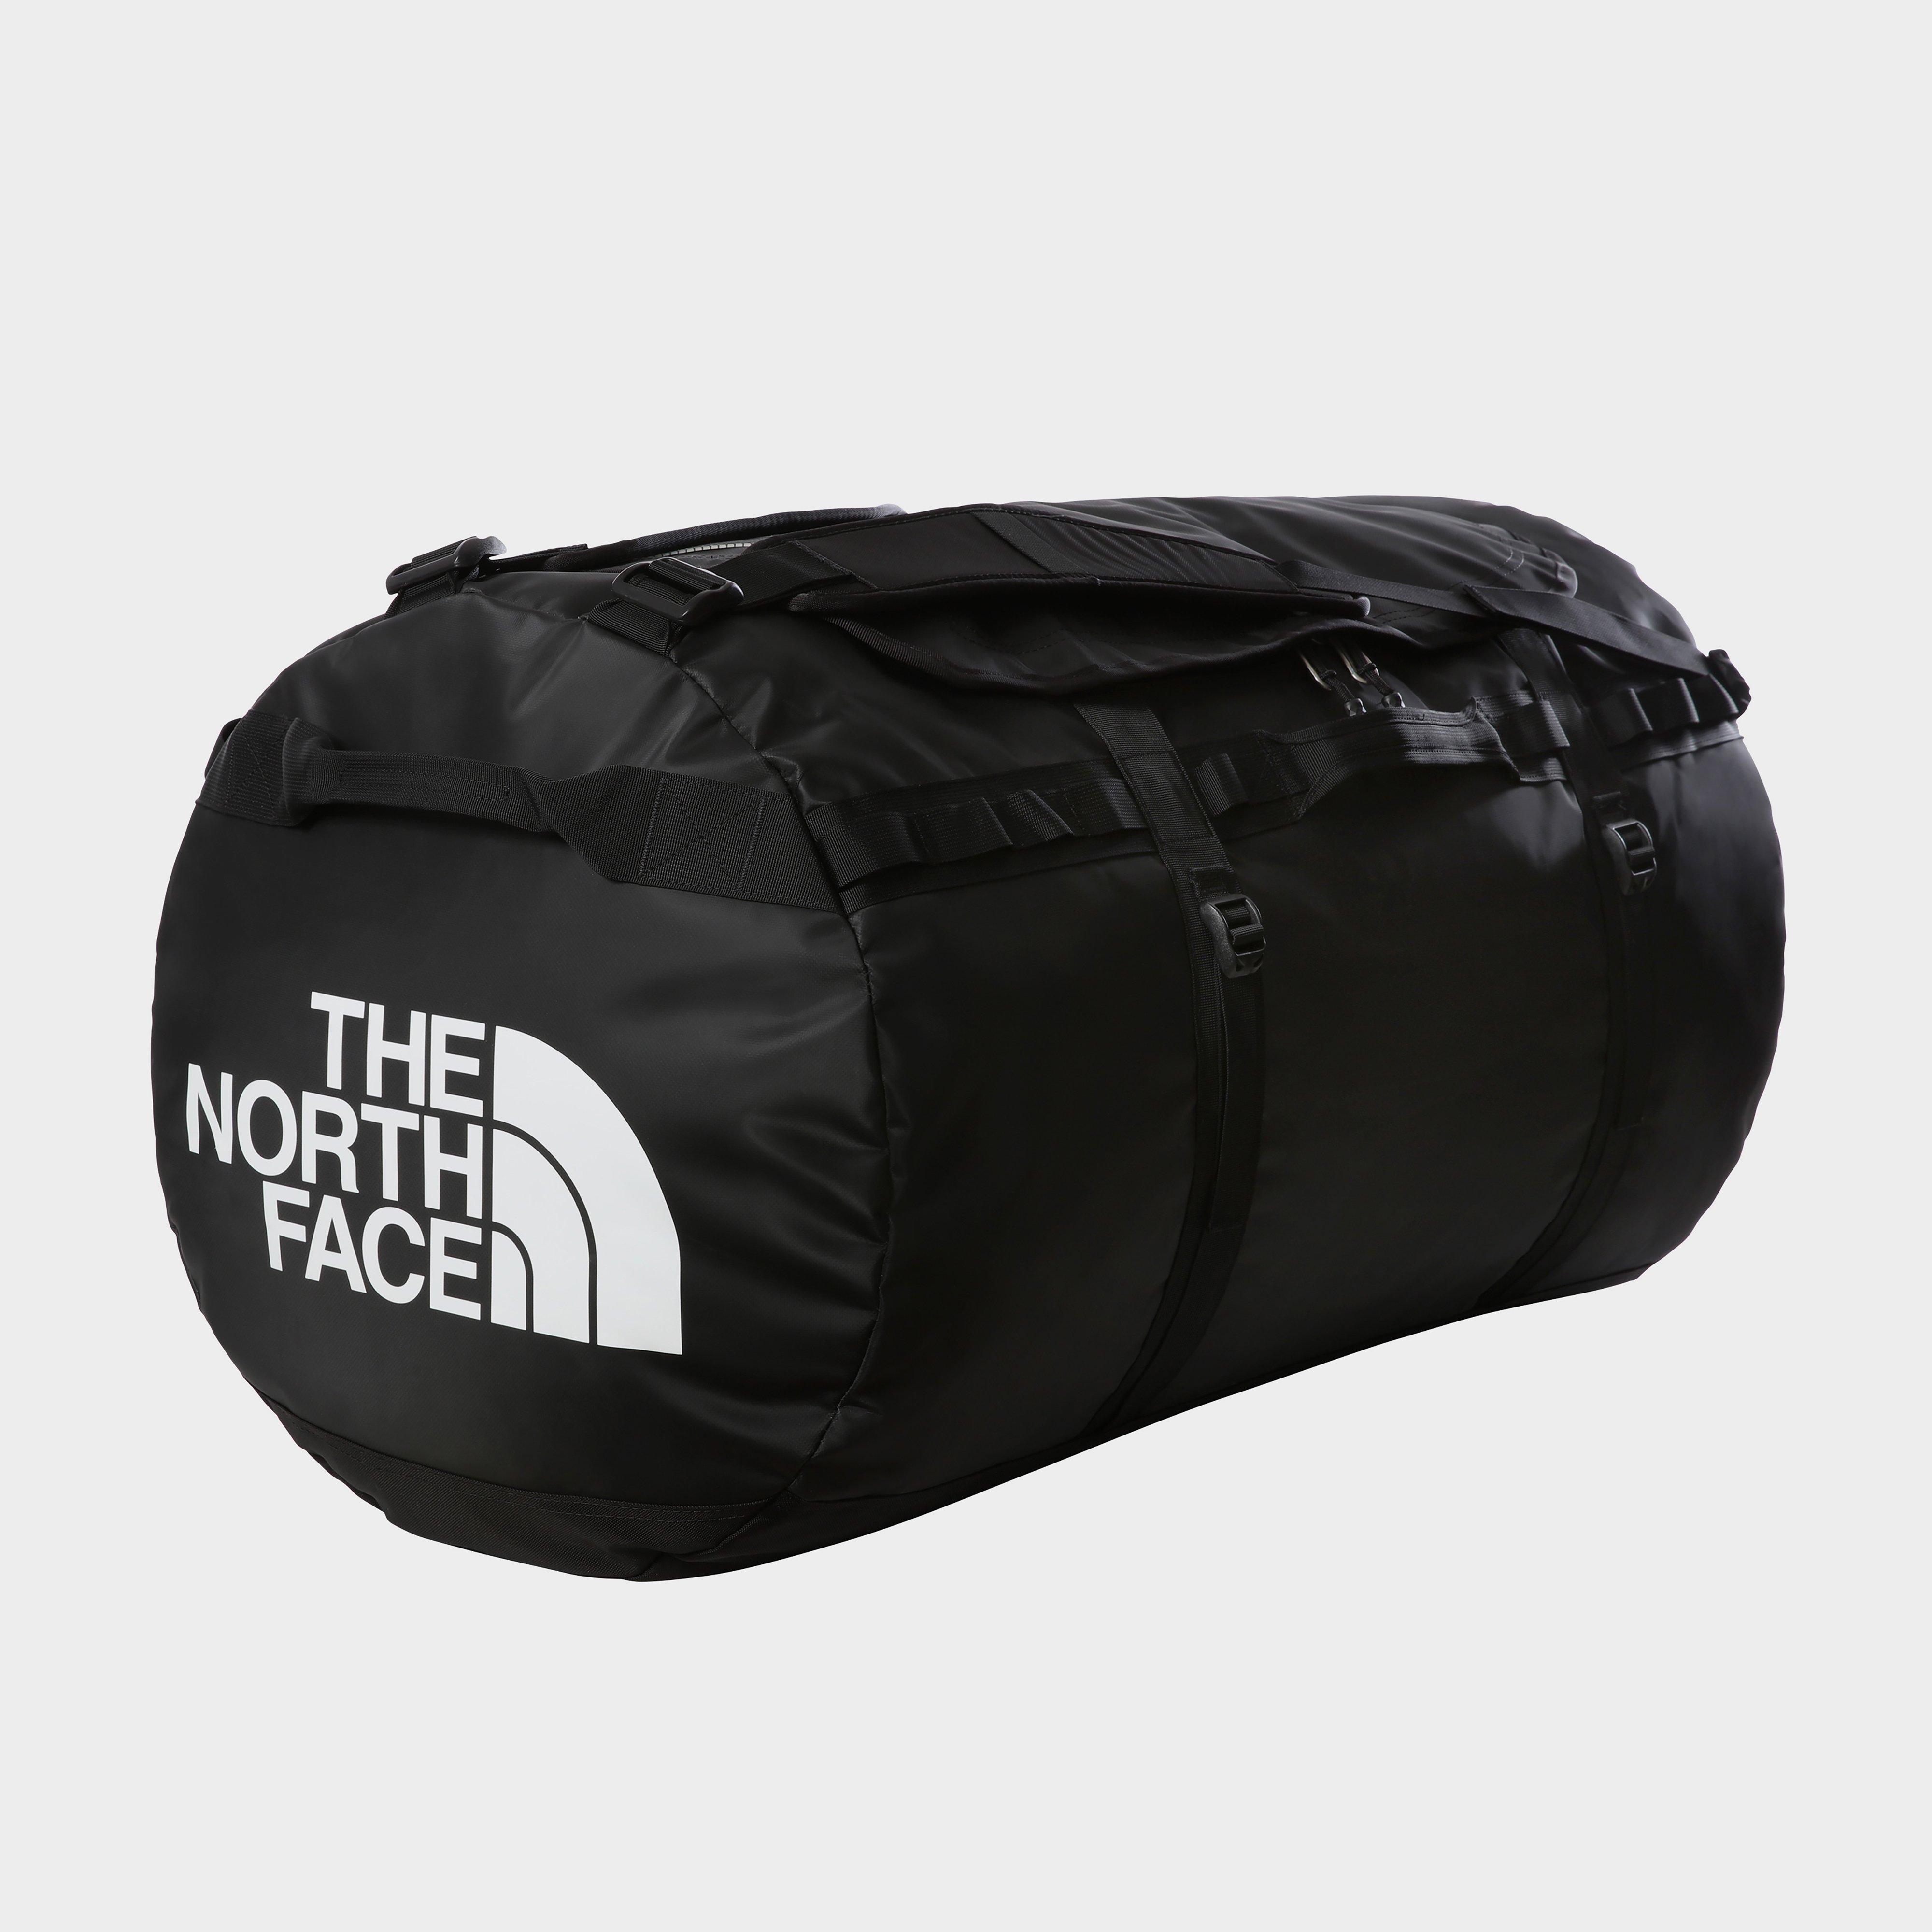 The North Face Base Camp Duffel Bag (xxl) - Black/black  Black/black